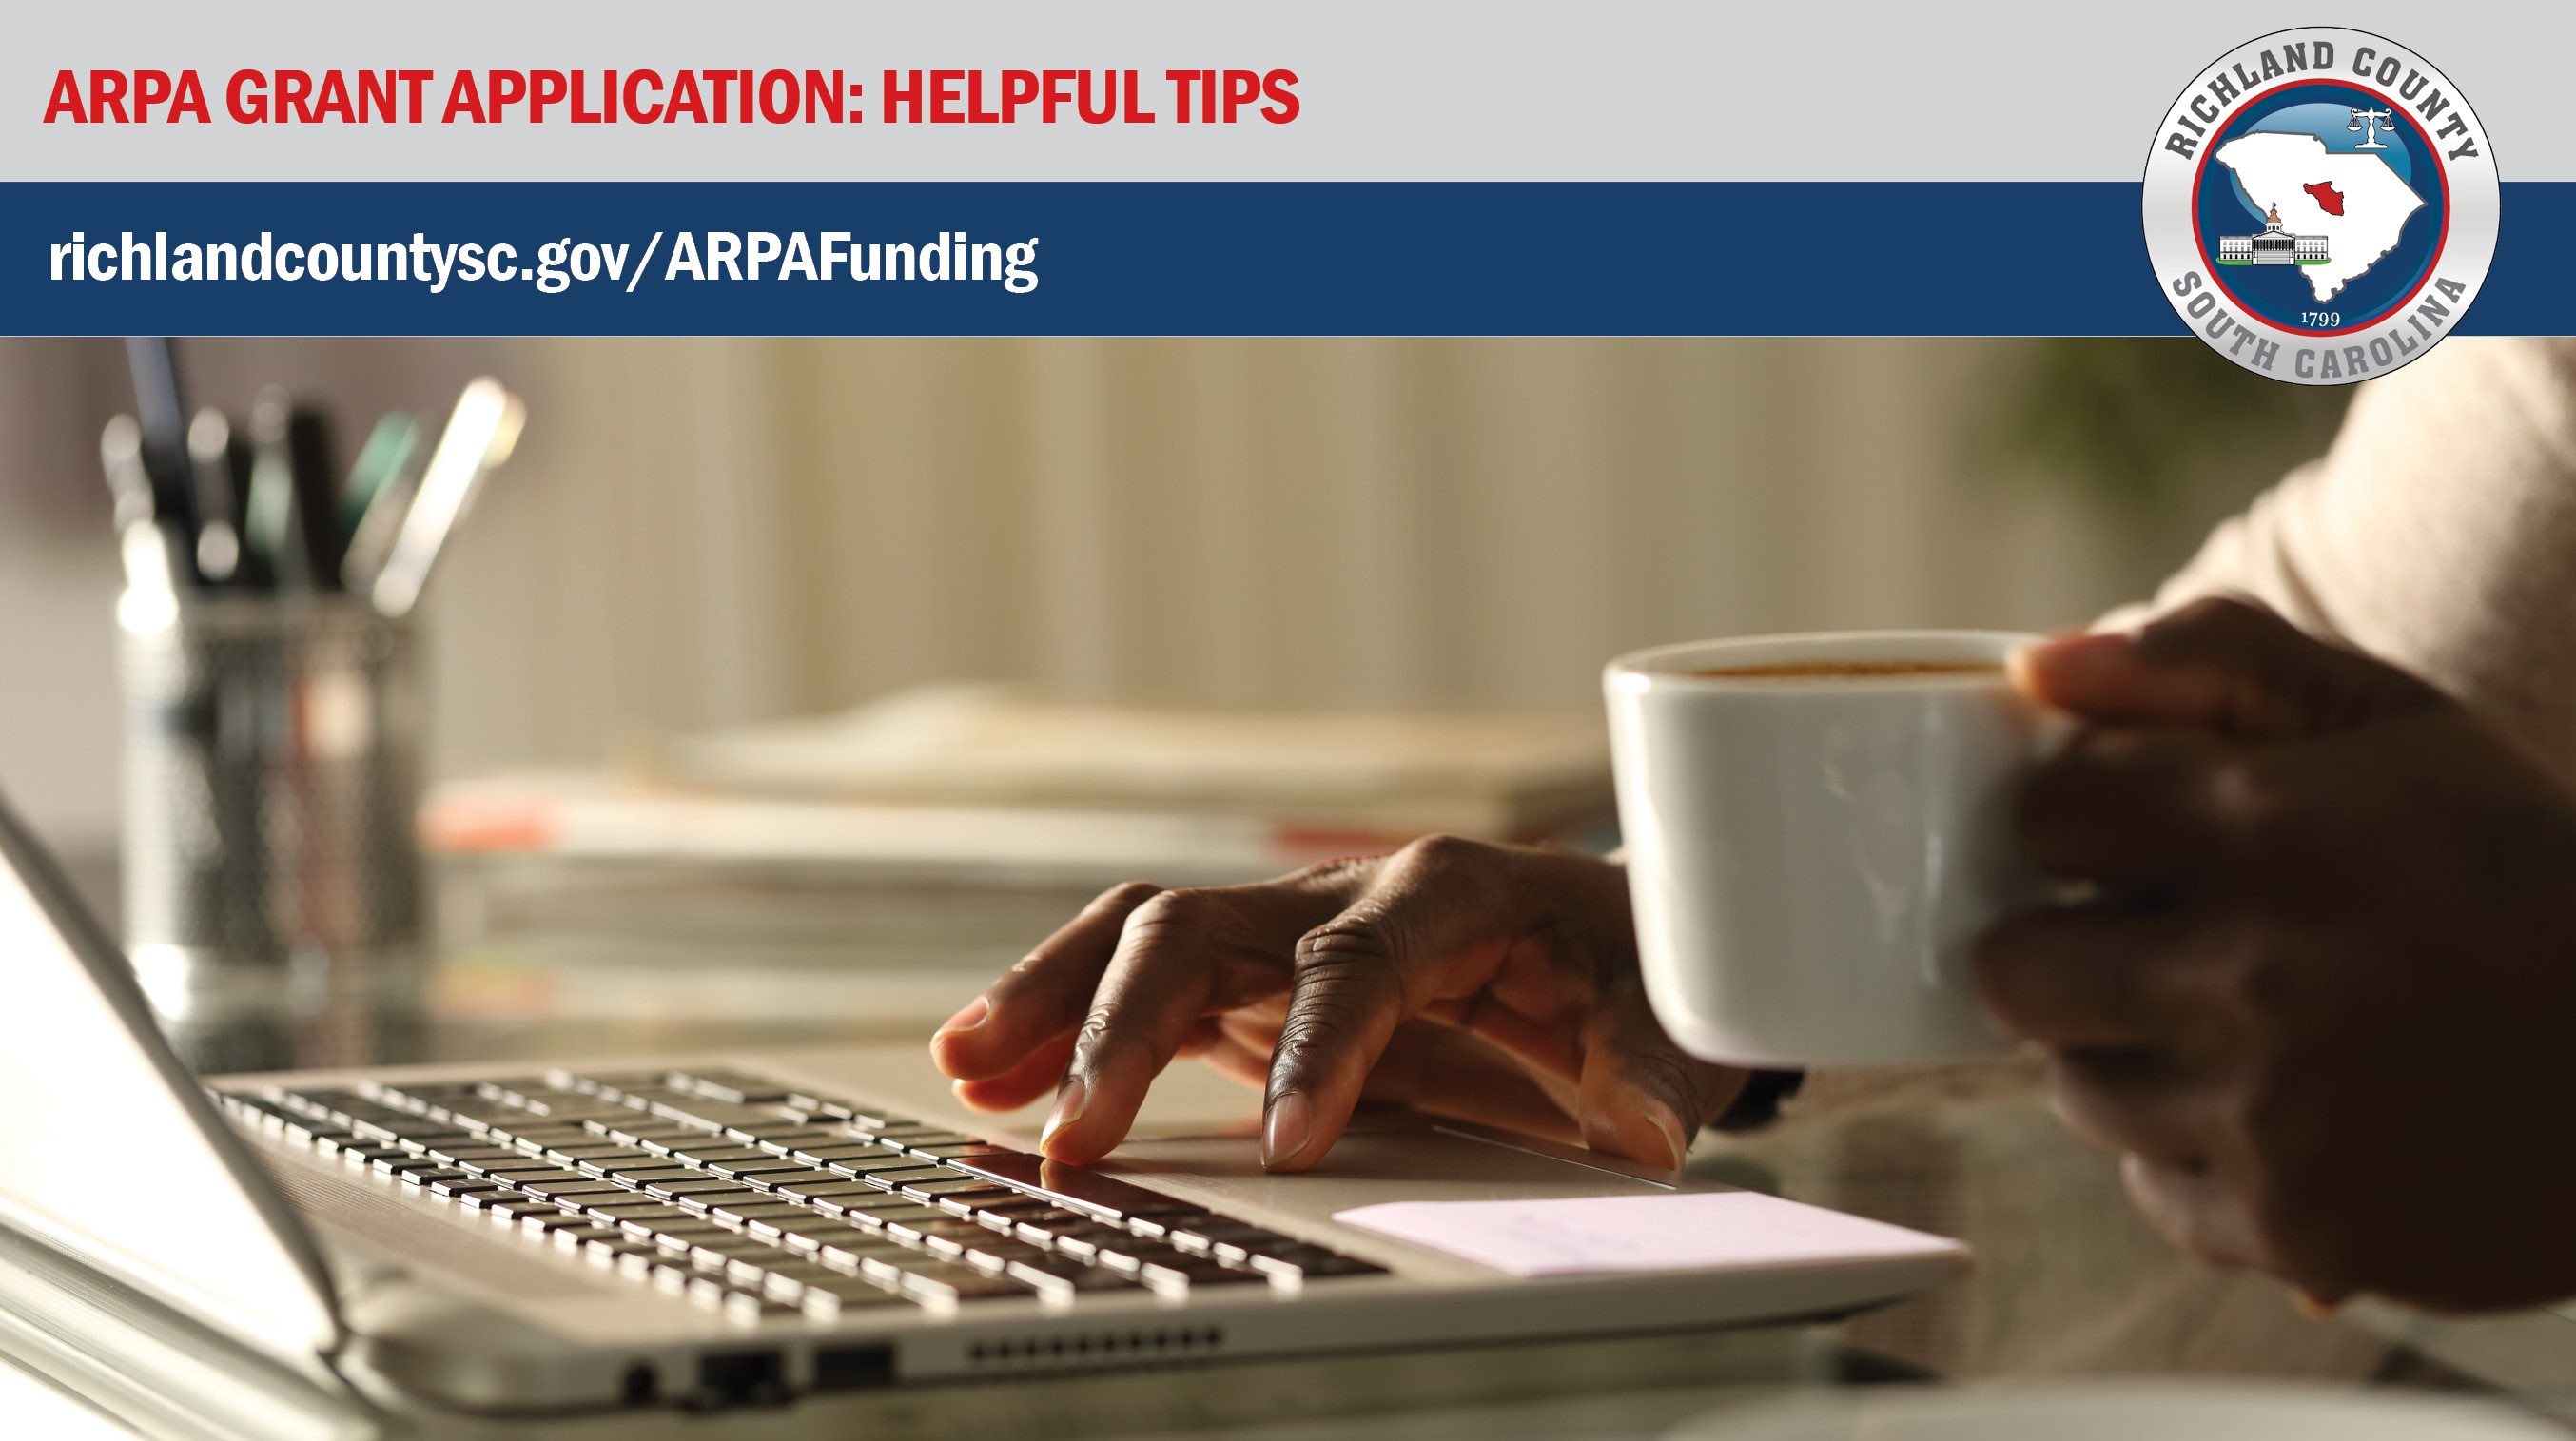 ARPA grant application helpful tips - www.richlandcountysc.gov/arpafunding